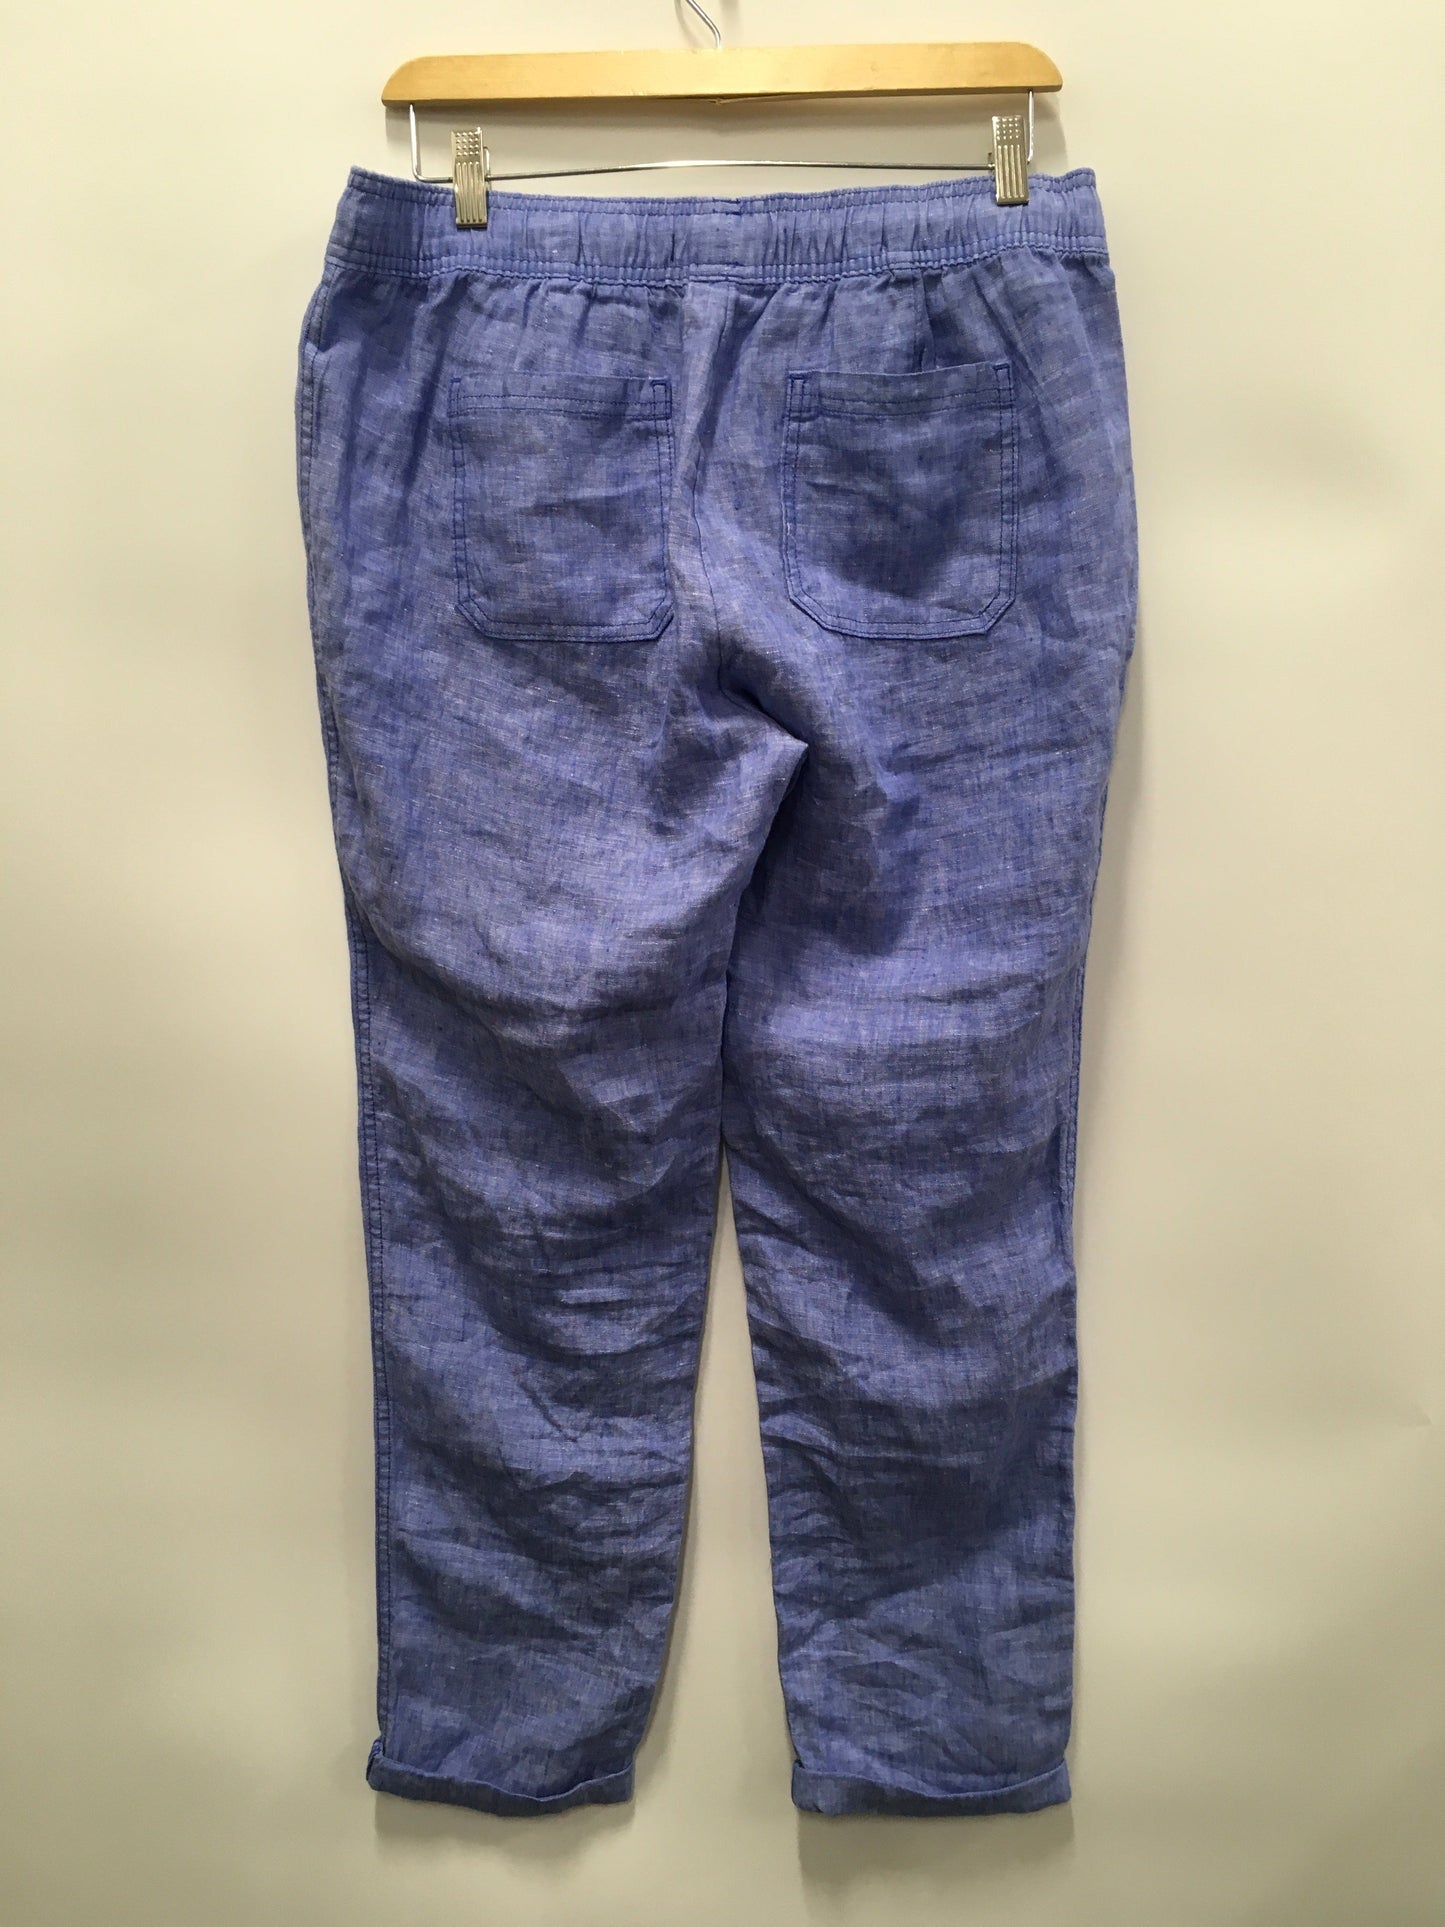 Blue Pants Linen Lilly Pulitzer, Size M